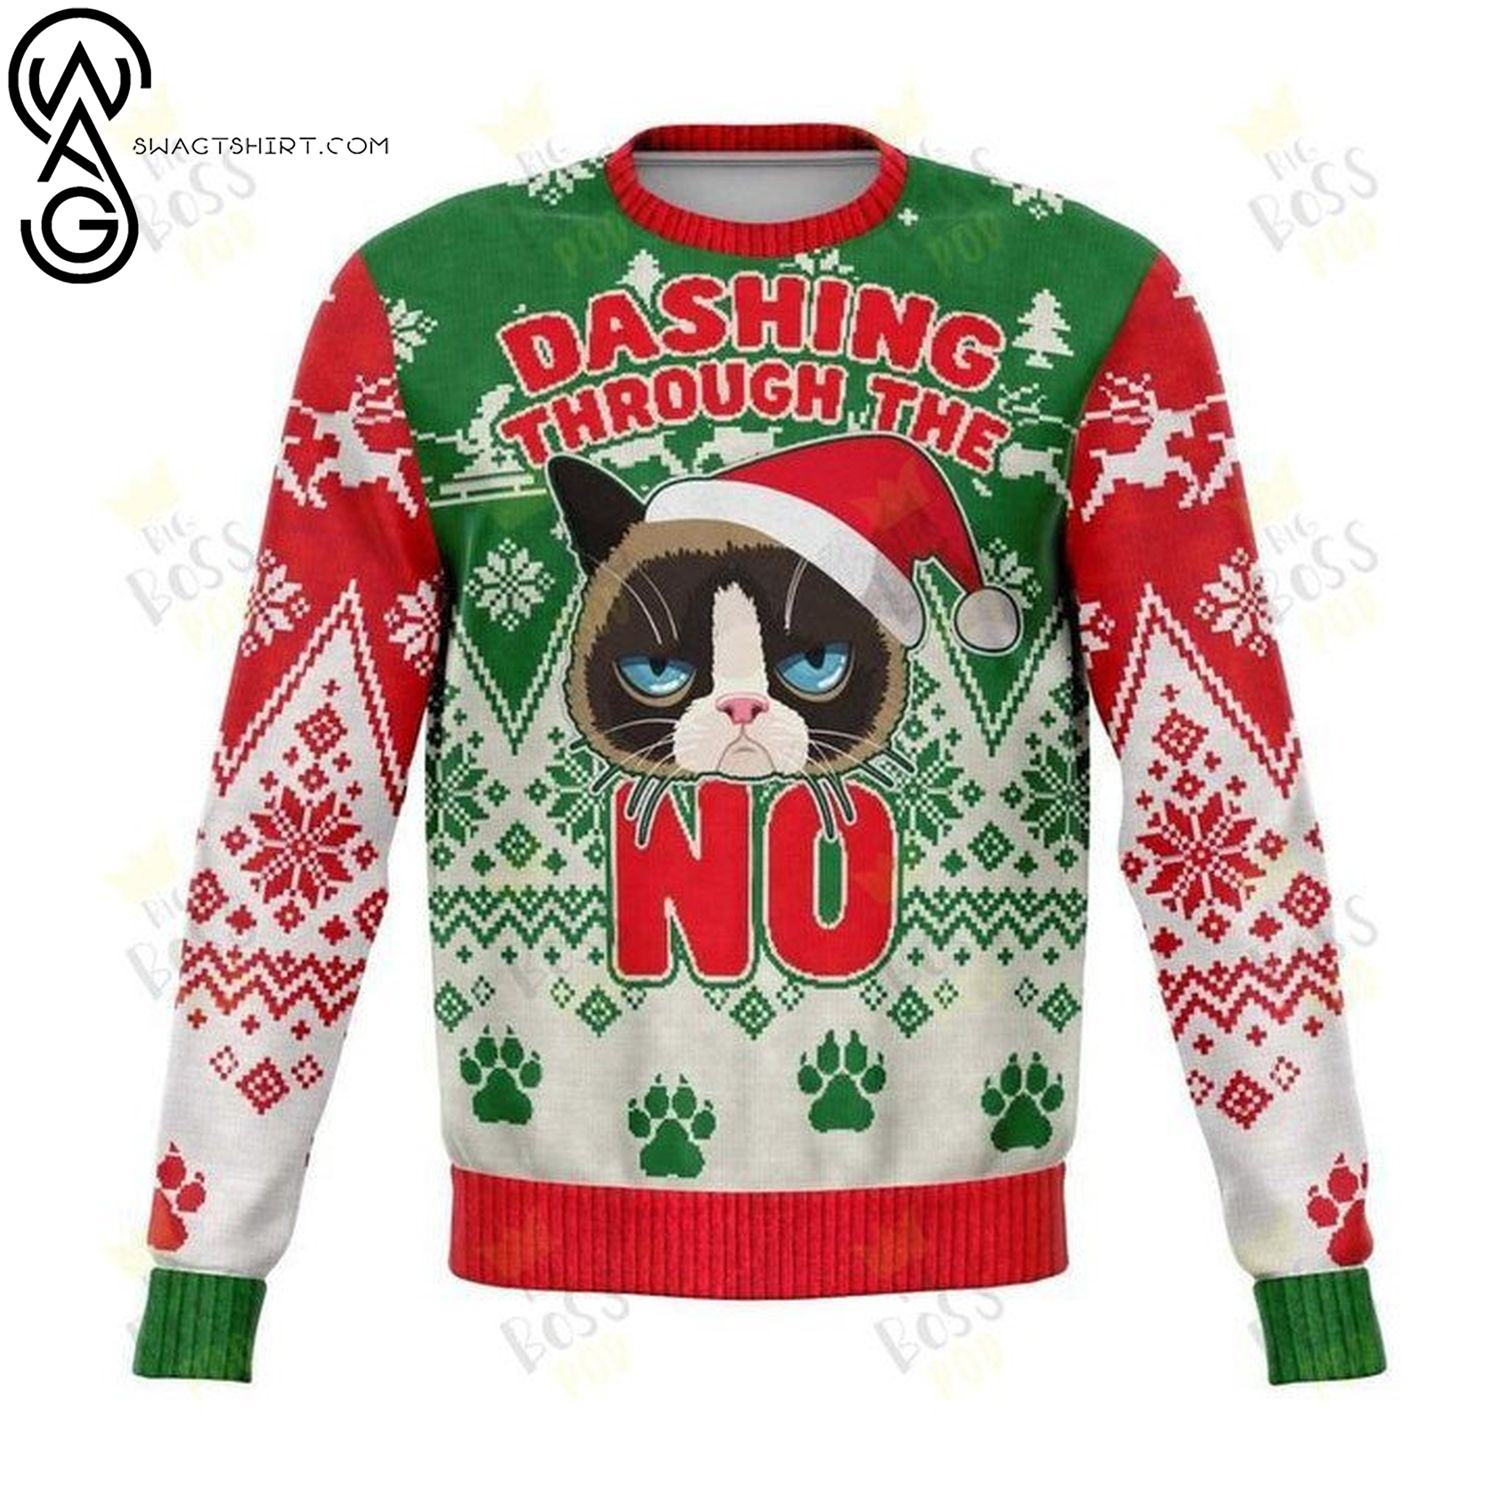 Dashing through the no grumpy cat full printing ugly christmas sweater